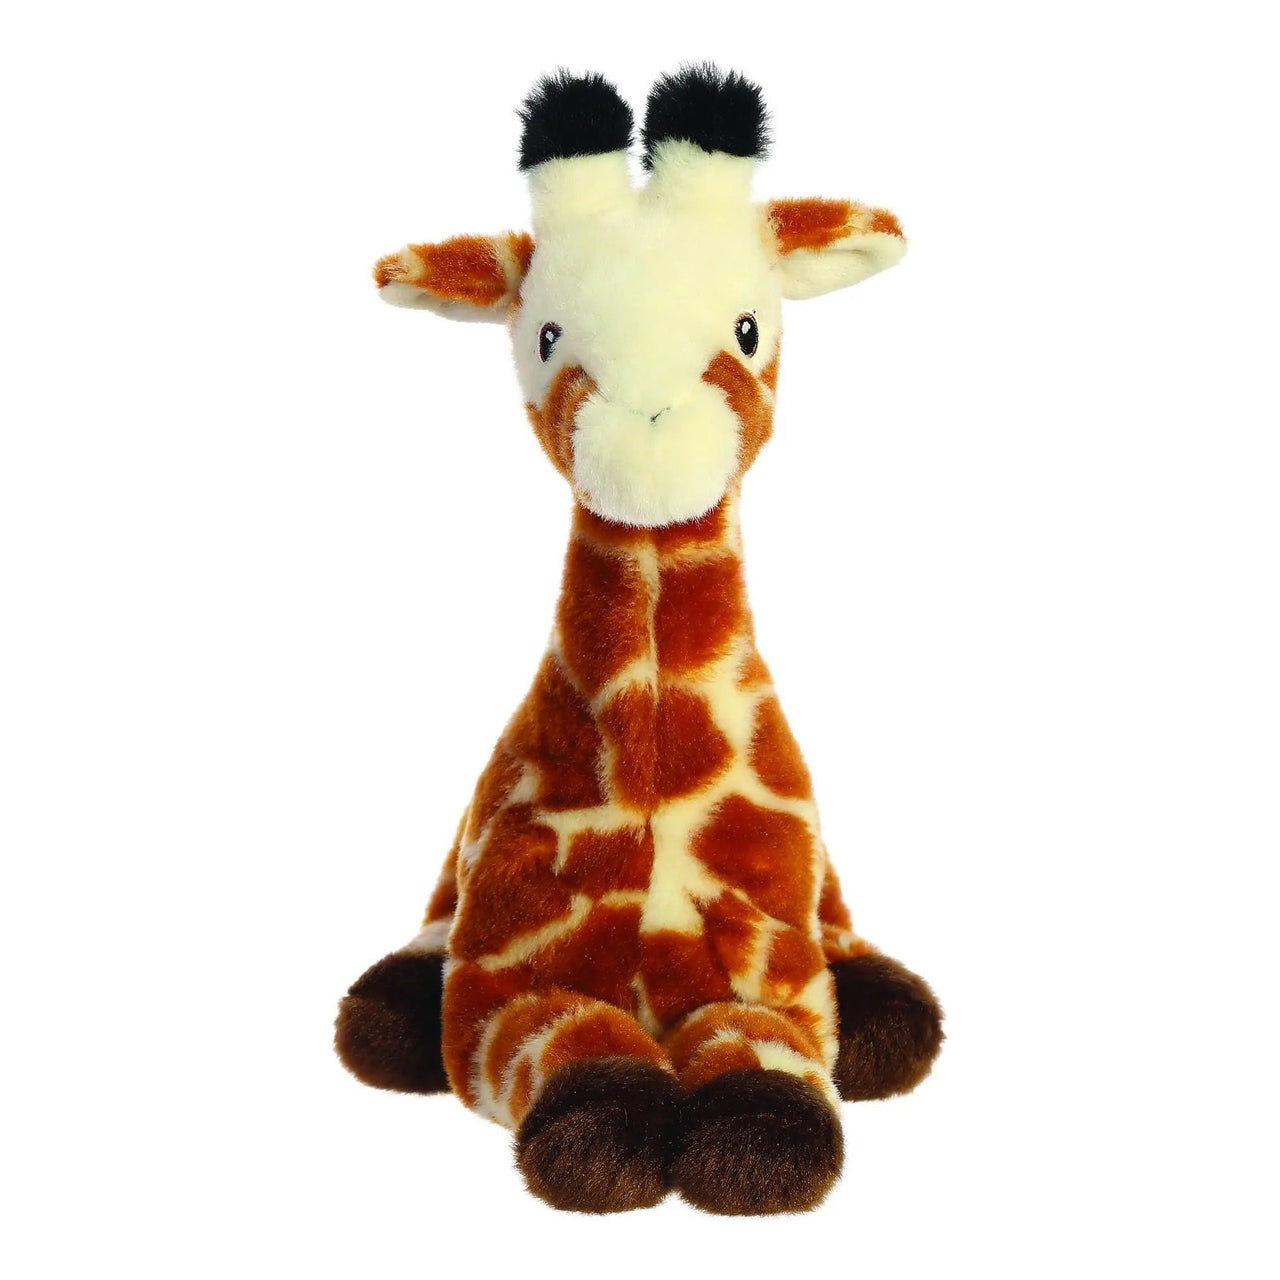 Eco Nation Giraffe 8.5" Plush Toy Aurora